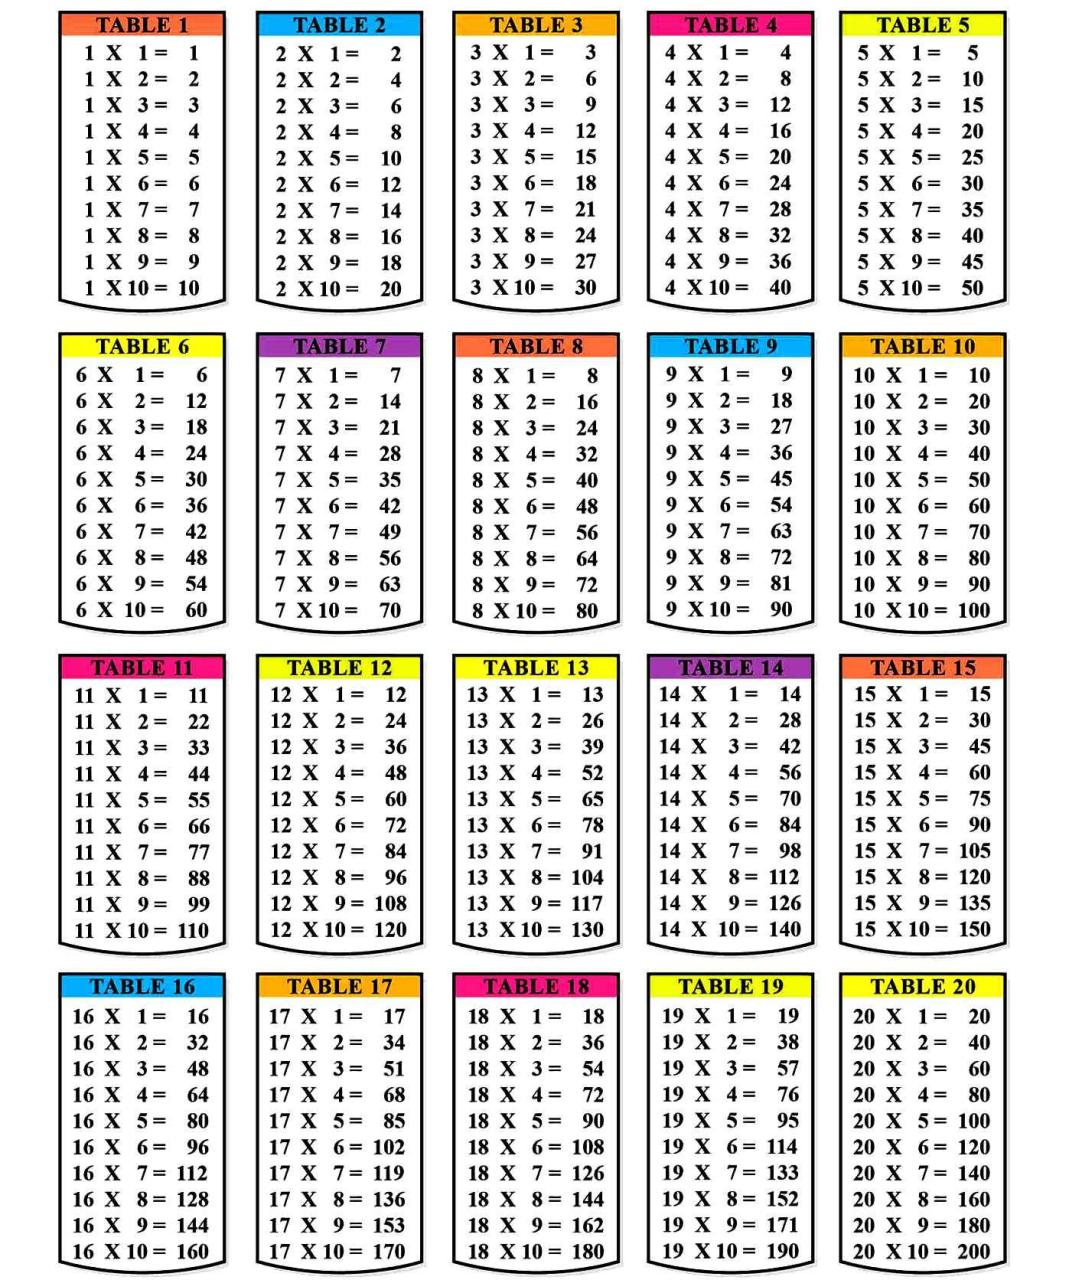 Multiplication Chart Printable Pdf